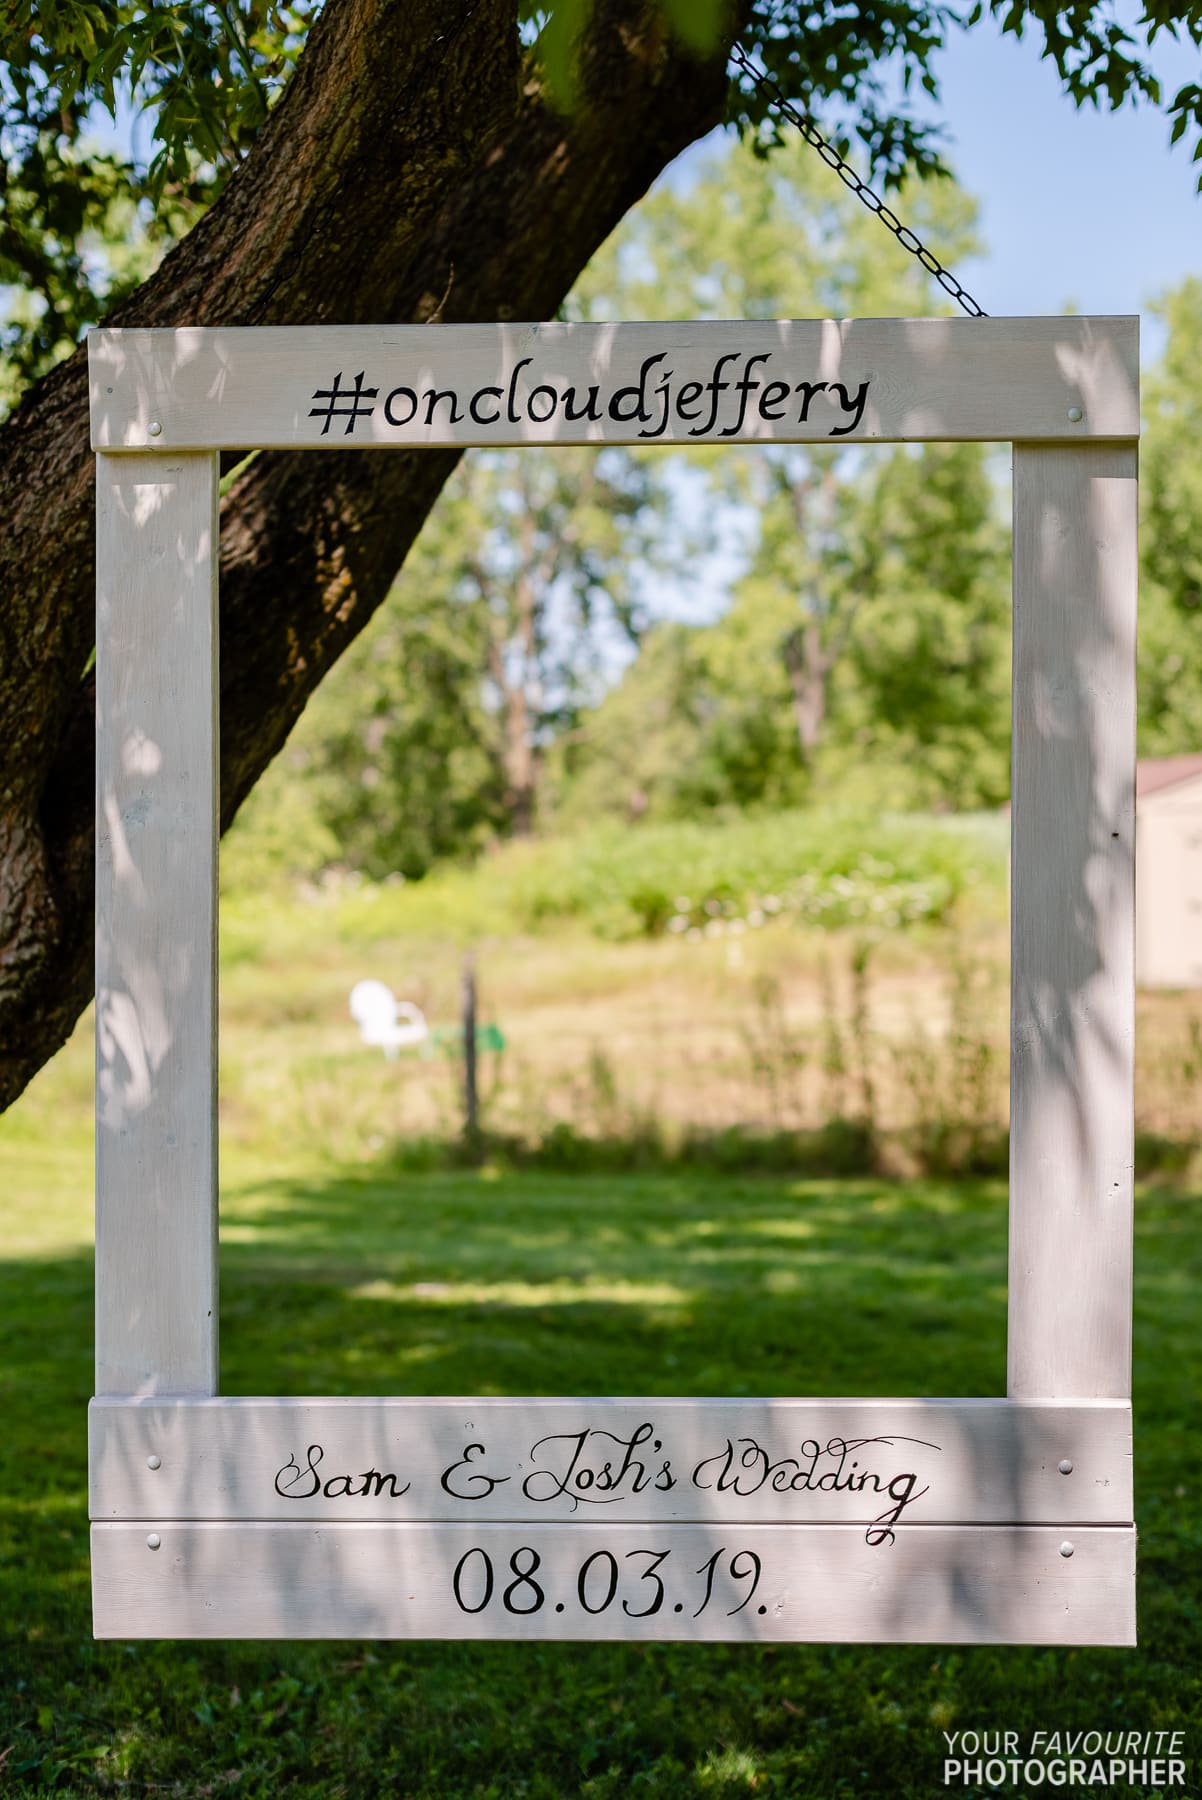 Sam & Josh's backyard wedding photos in Courtice, Ontario